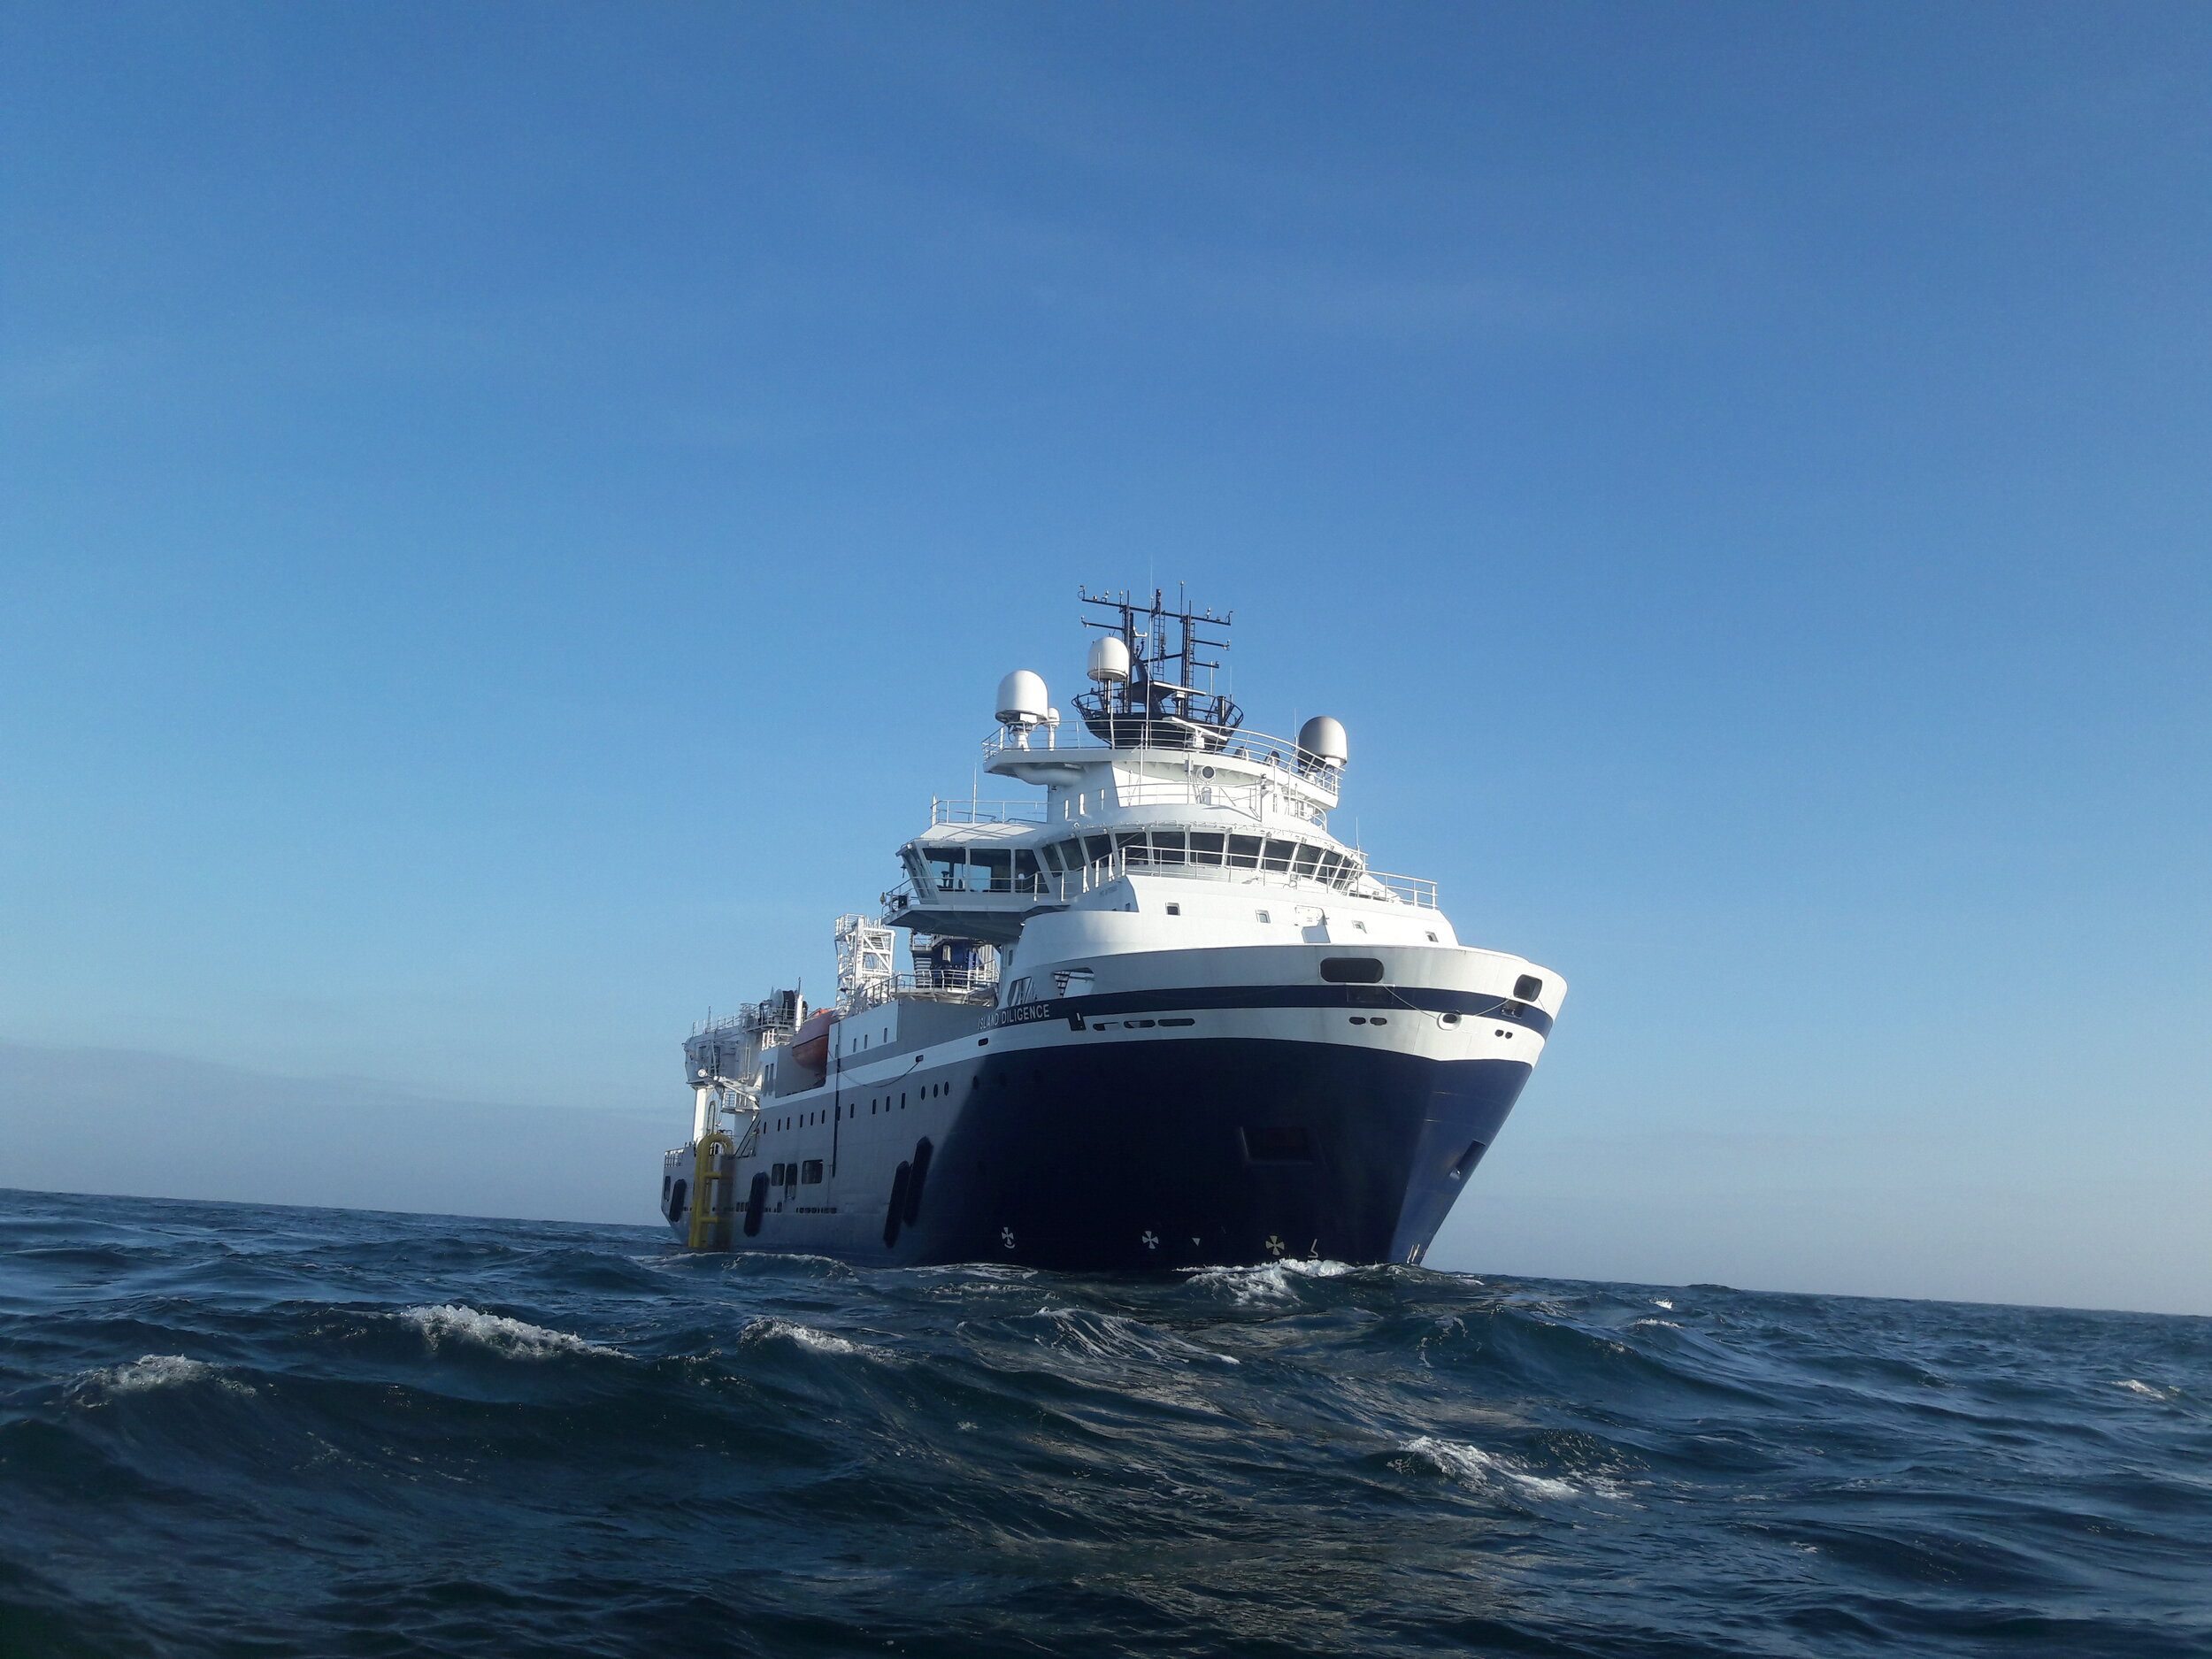 Island Offshore Walk-to-Work Vessel Wins Floating Wind Work in Norway